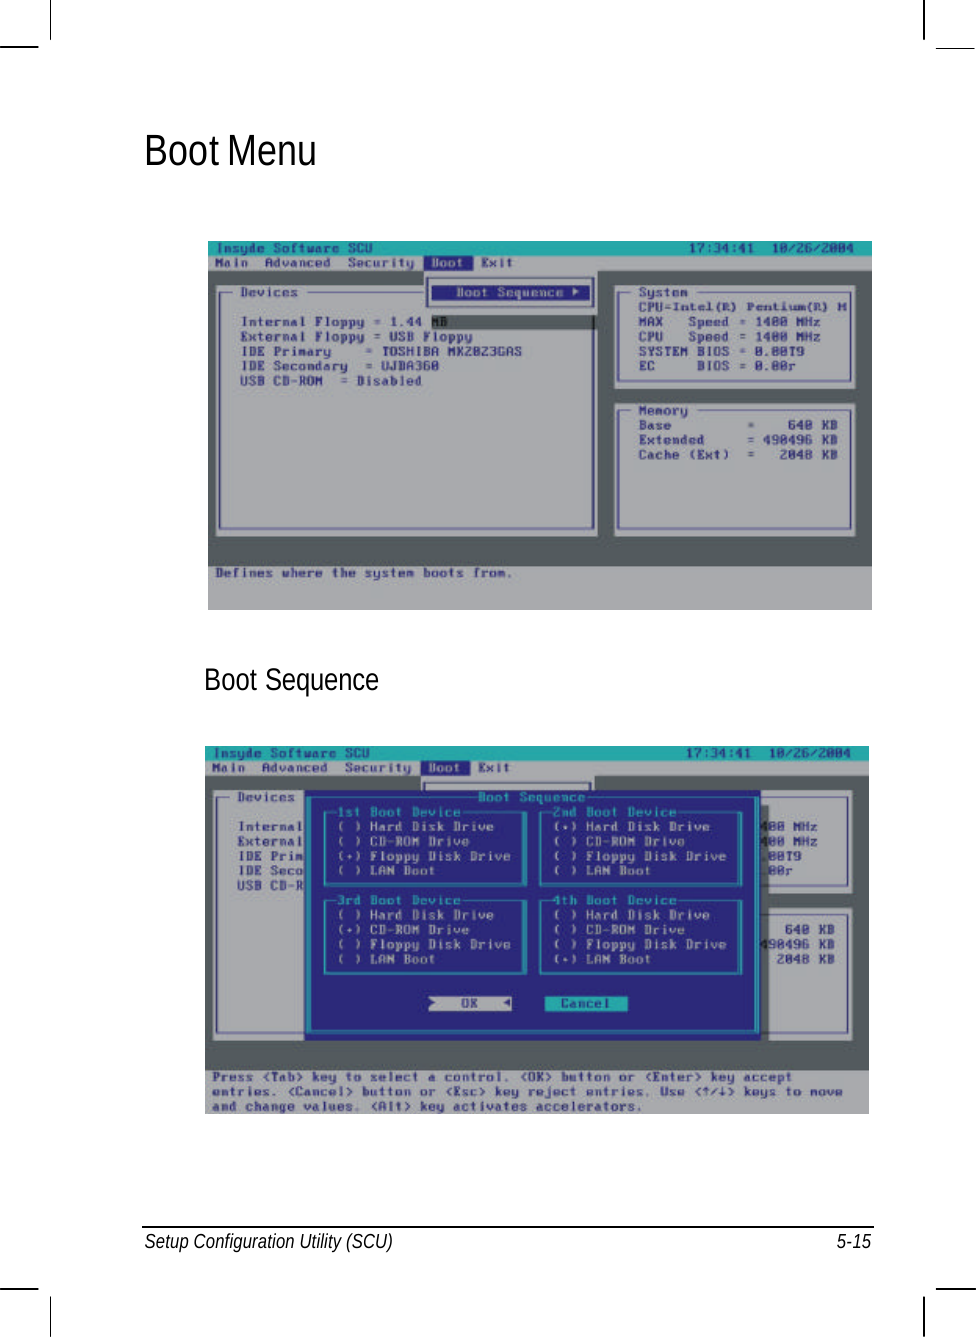  Setup Configuration Utility (SCU) 5-15 Boot Menu  Boot Sequence  